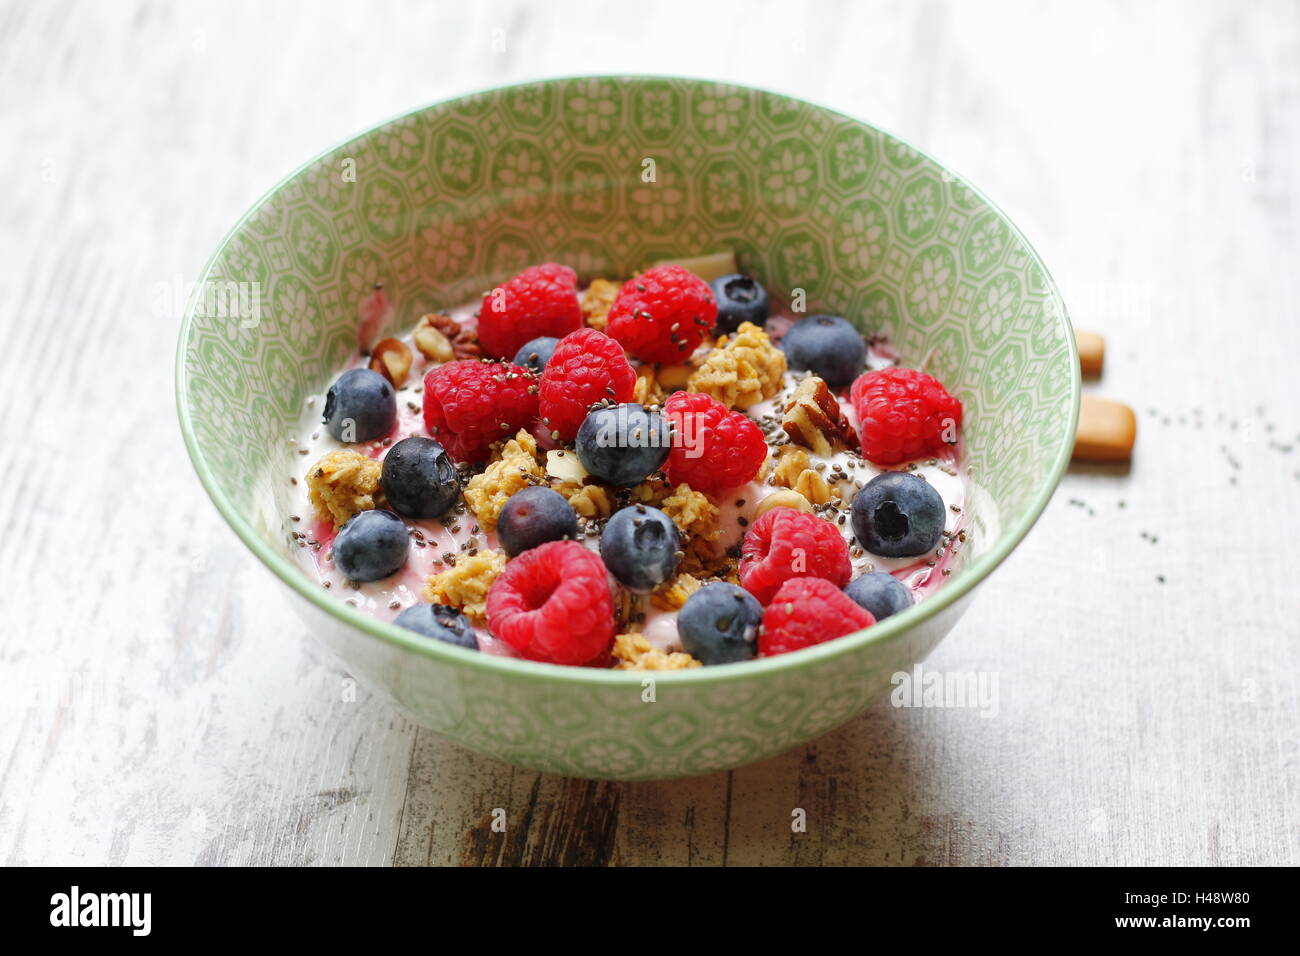 Fresh fruit with muesli and yogurt, in a ceramic bowl Stock Photo